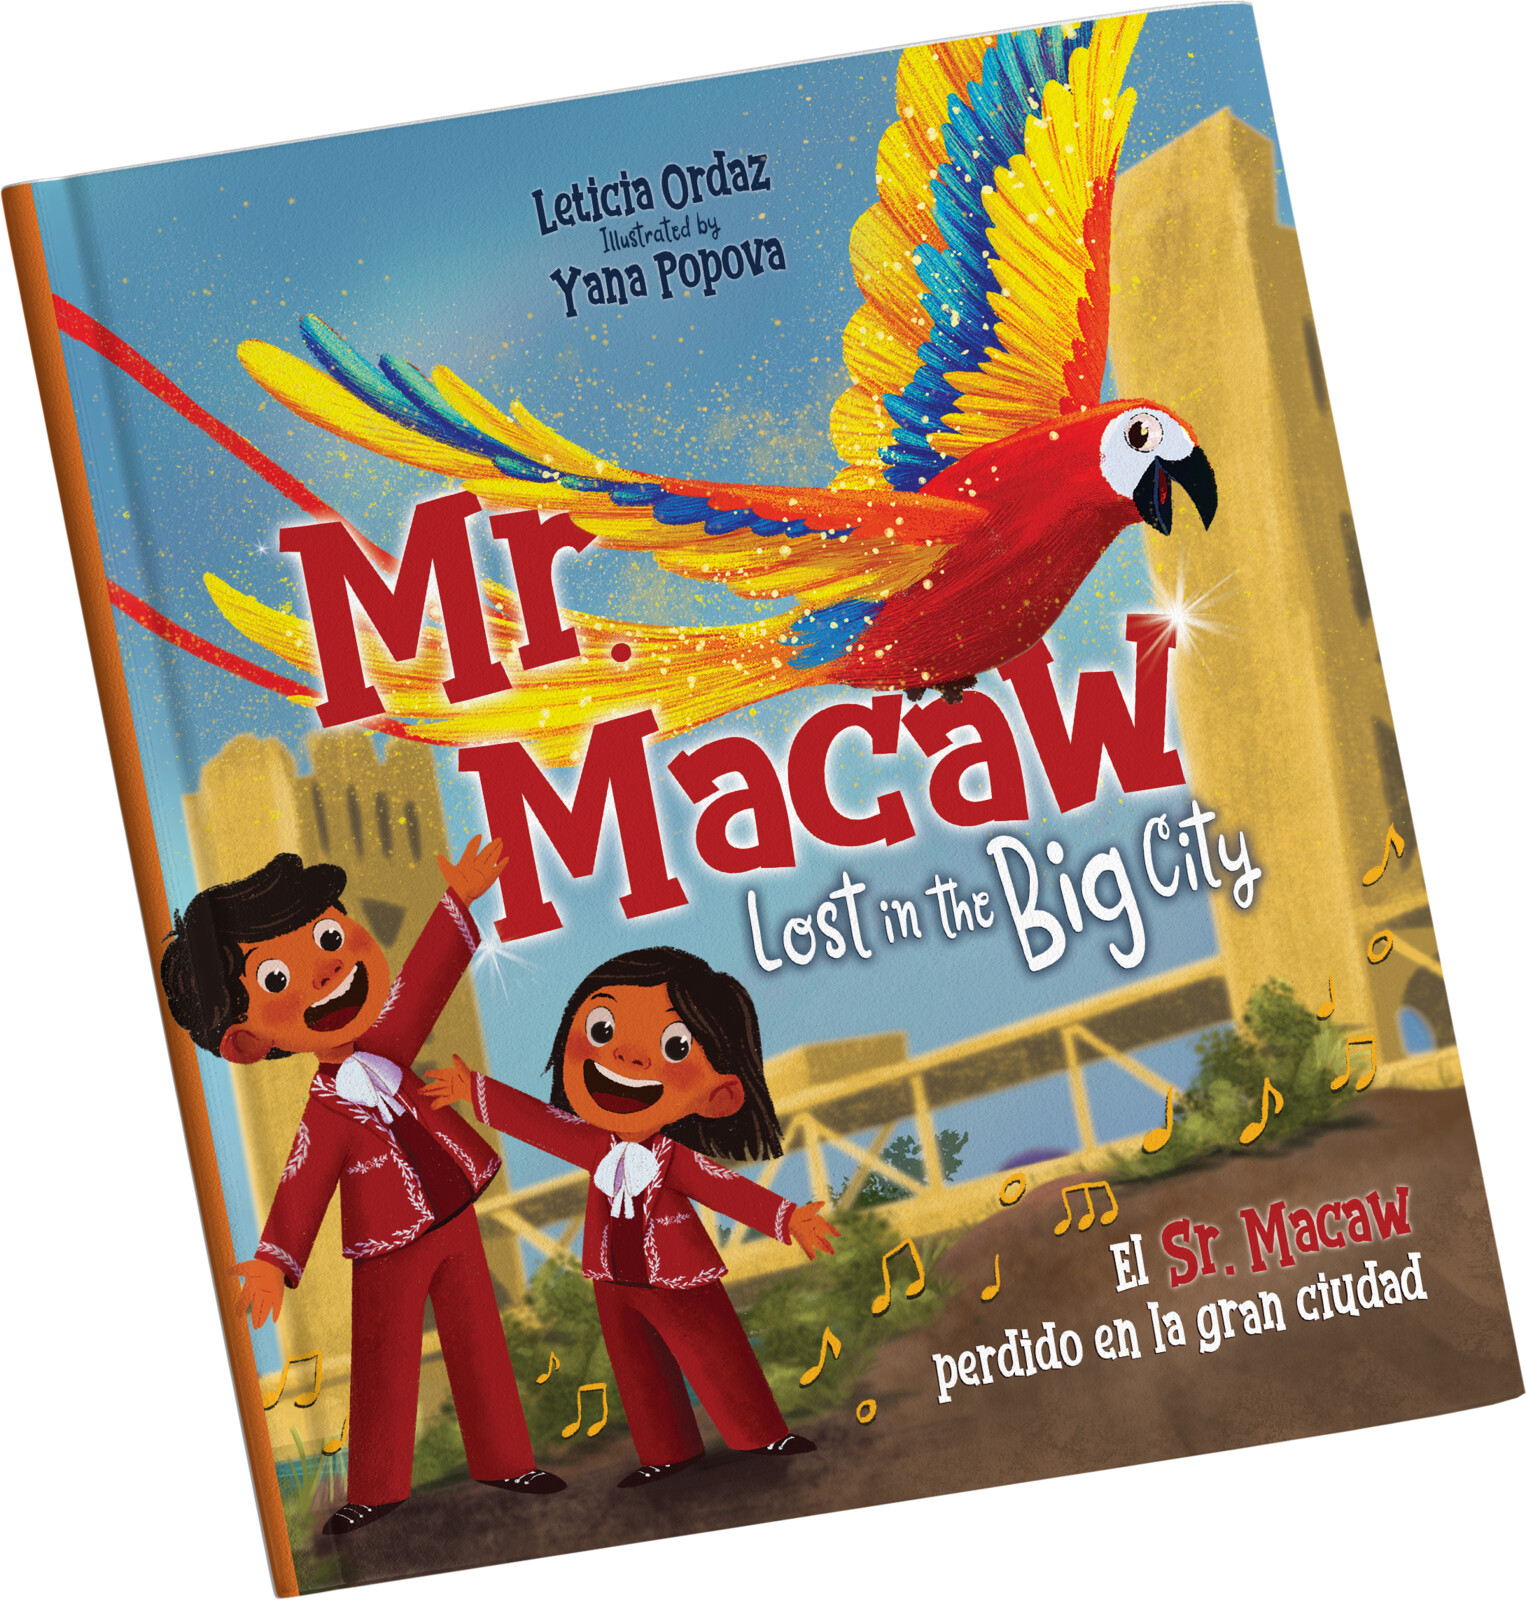 Mr. Macaw Lost in the Big City